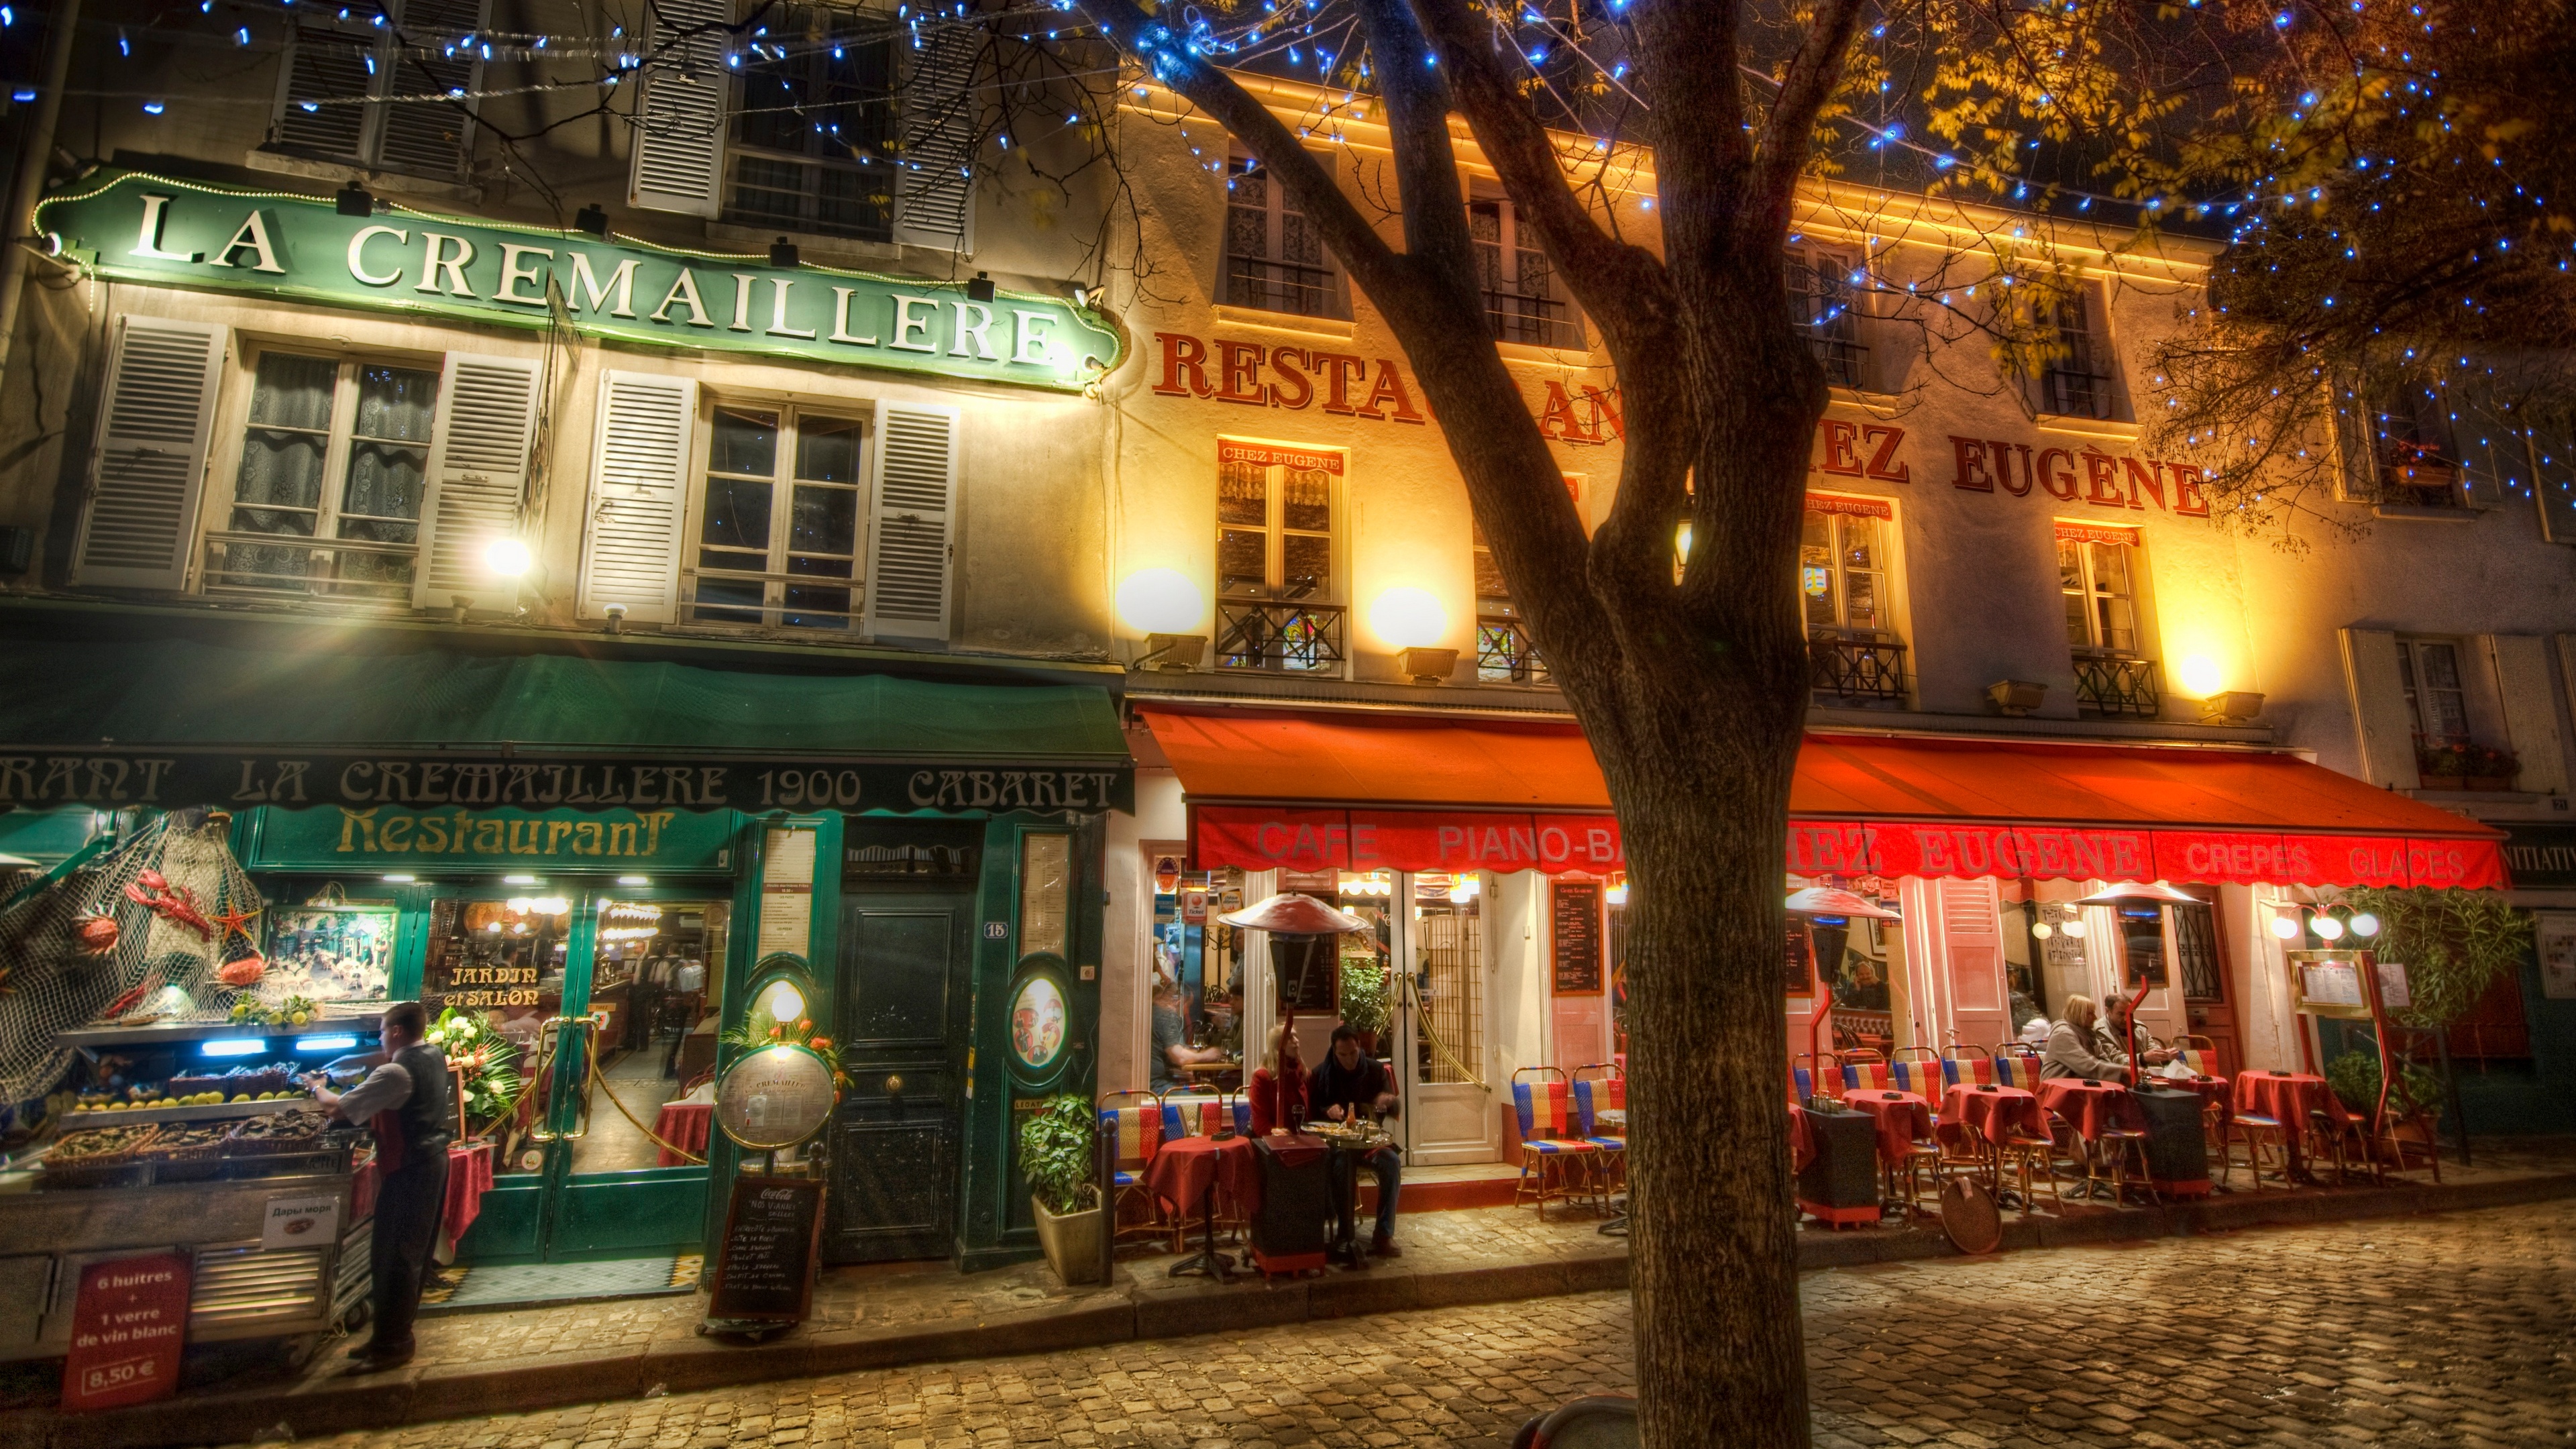 General 3840x2160 Trey Ratcliff photography 4K France building lights trees restaurant cafe night Lyon street